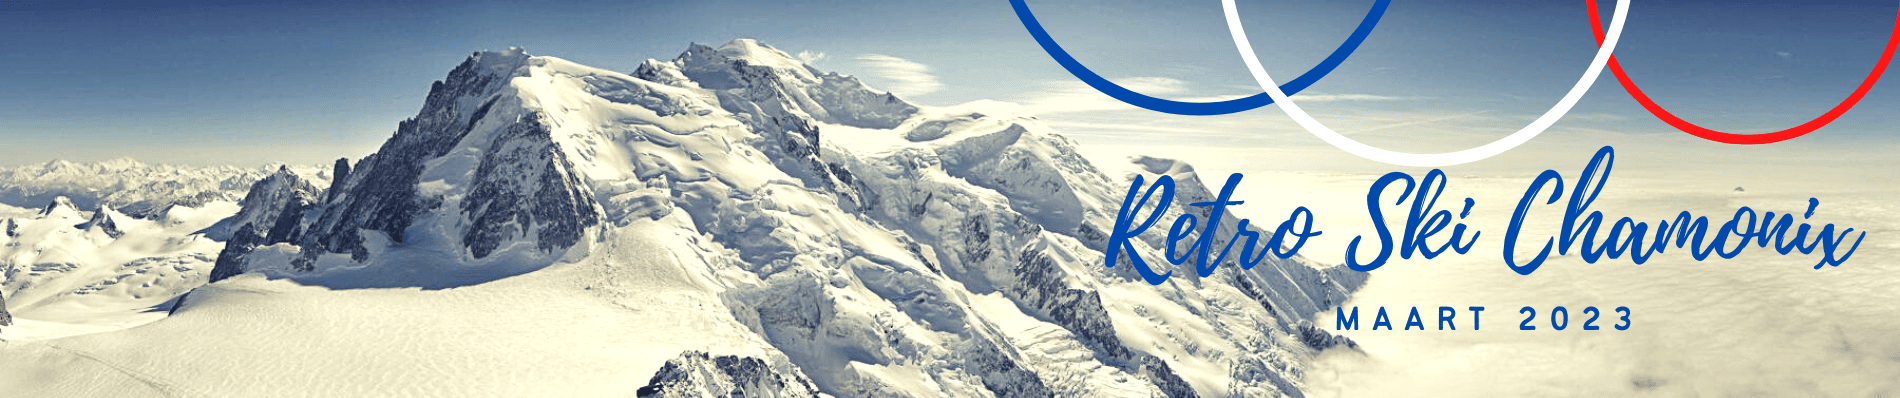 RETRO SKI Chamonix Frankrijk skivakantie wintersport